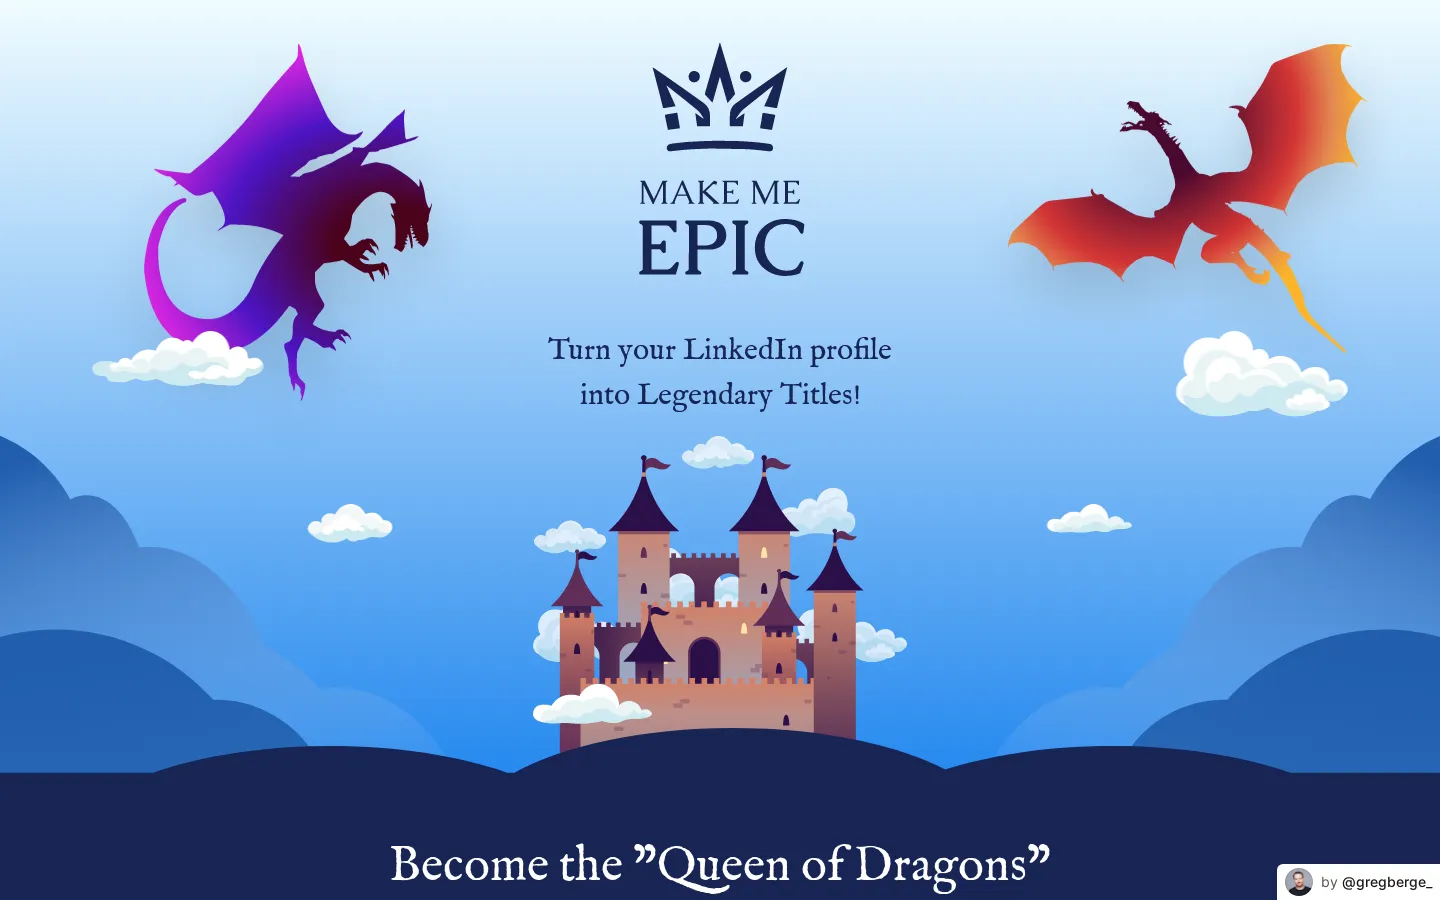 Make me Epic - Turn your LinkedIn profile into Legendary Titles!